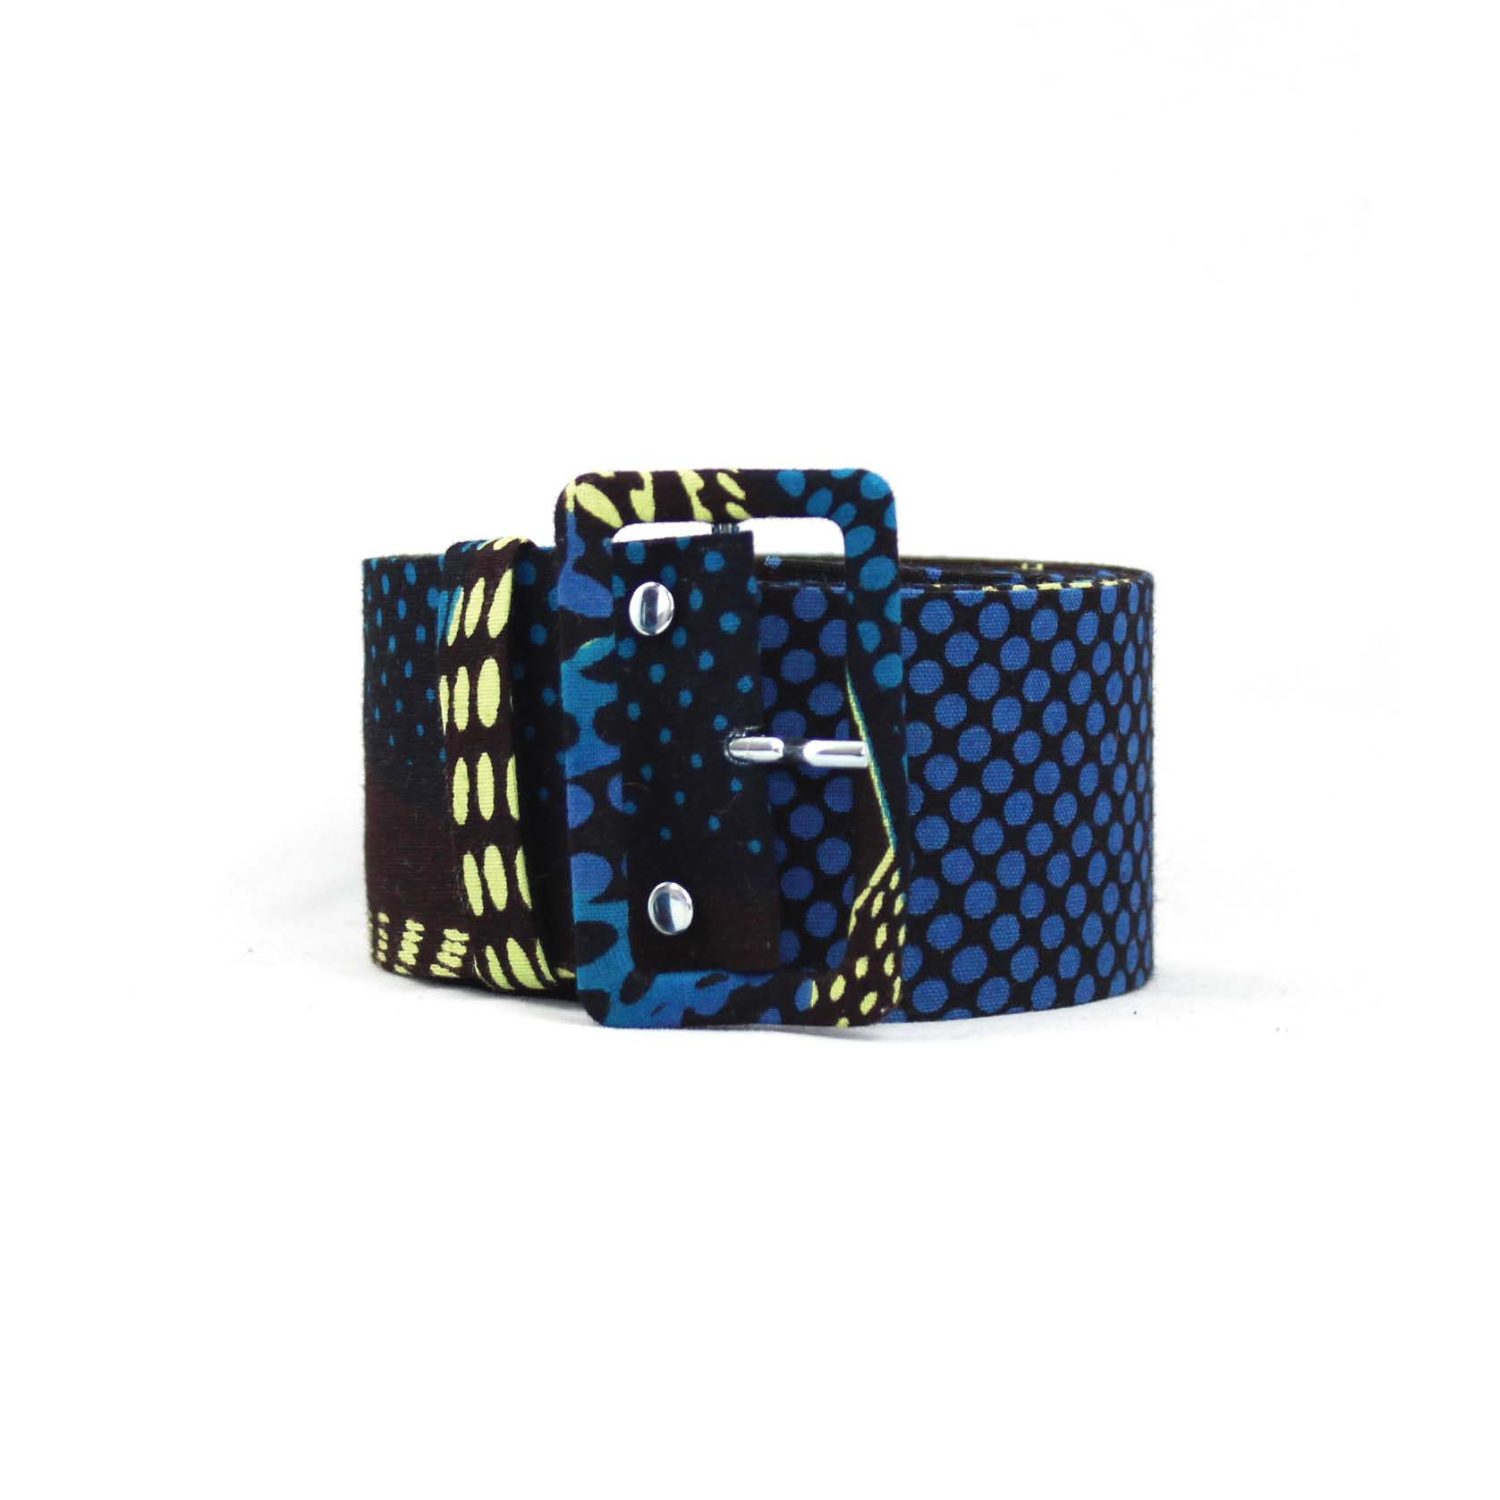 tola belt-blu.brwn-ankara-african-print-2wide, rectangle buckle, afrocentric-african-fabric-afrocyber-african-fashion-0400200029-37.50-1500x1500